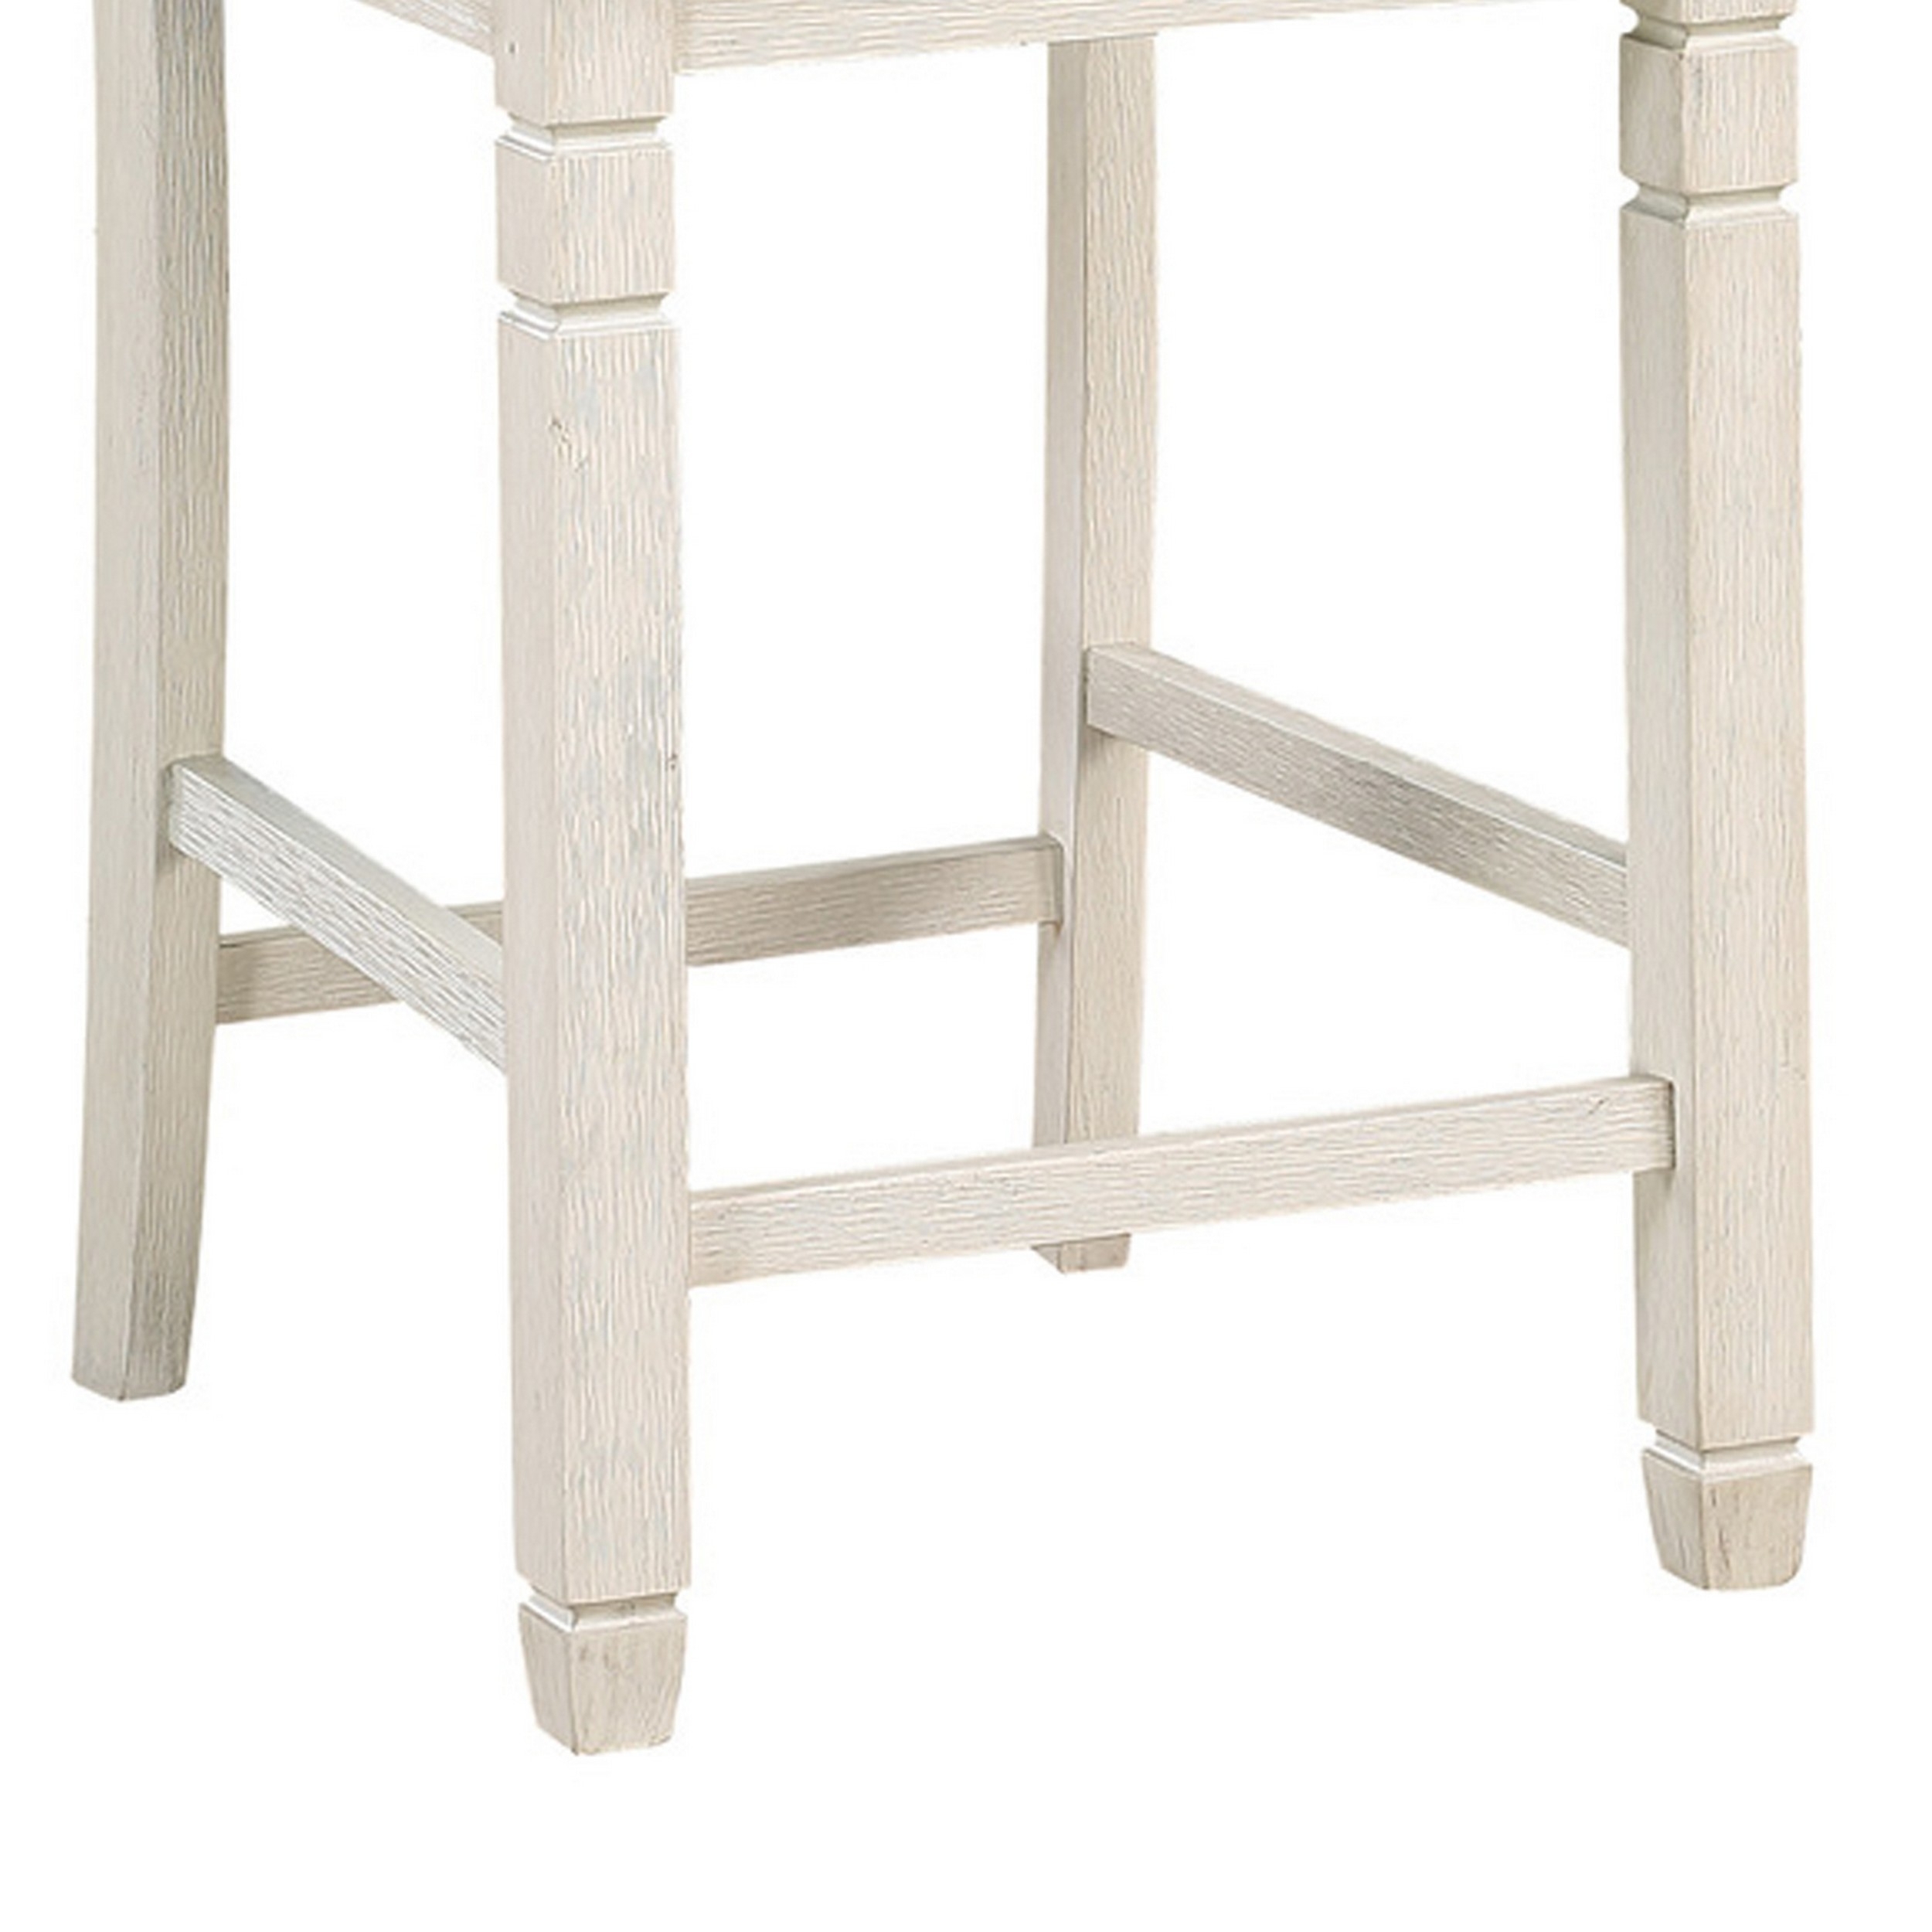 Anji 26 Inch Counter Chair, Crisp White Wood Frame, Piped Stitching, Beige- Saltoro Sherpi